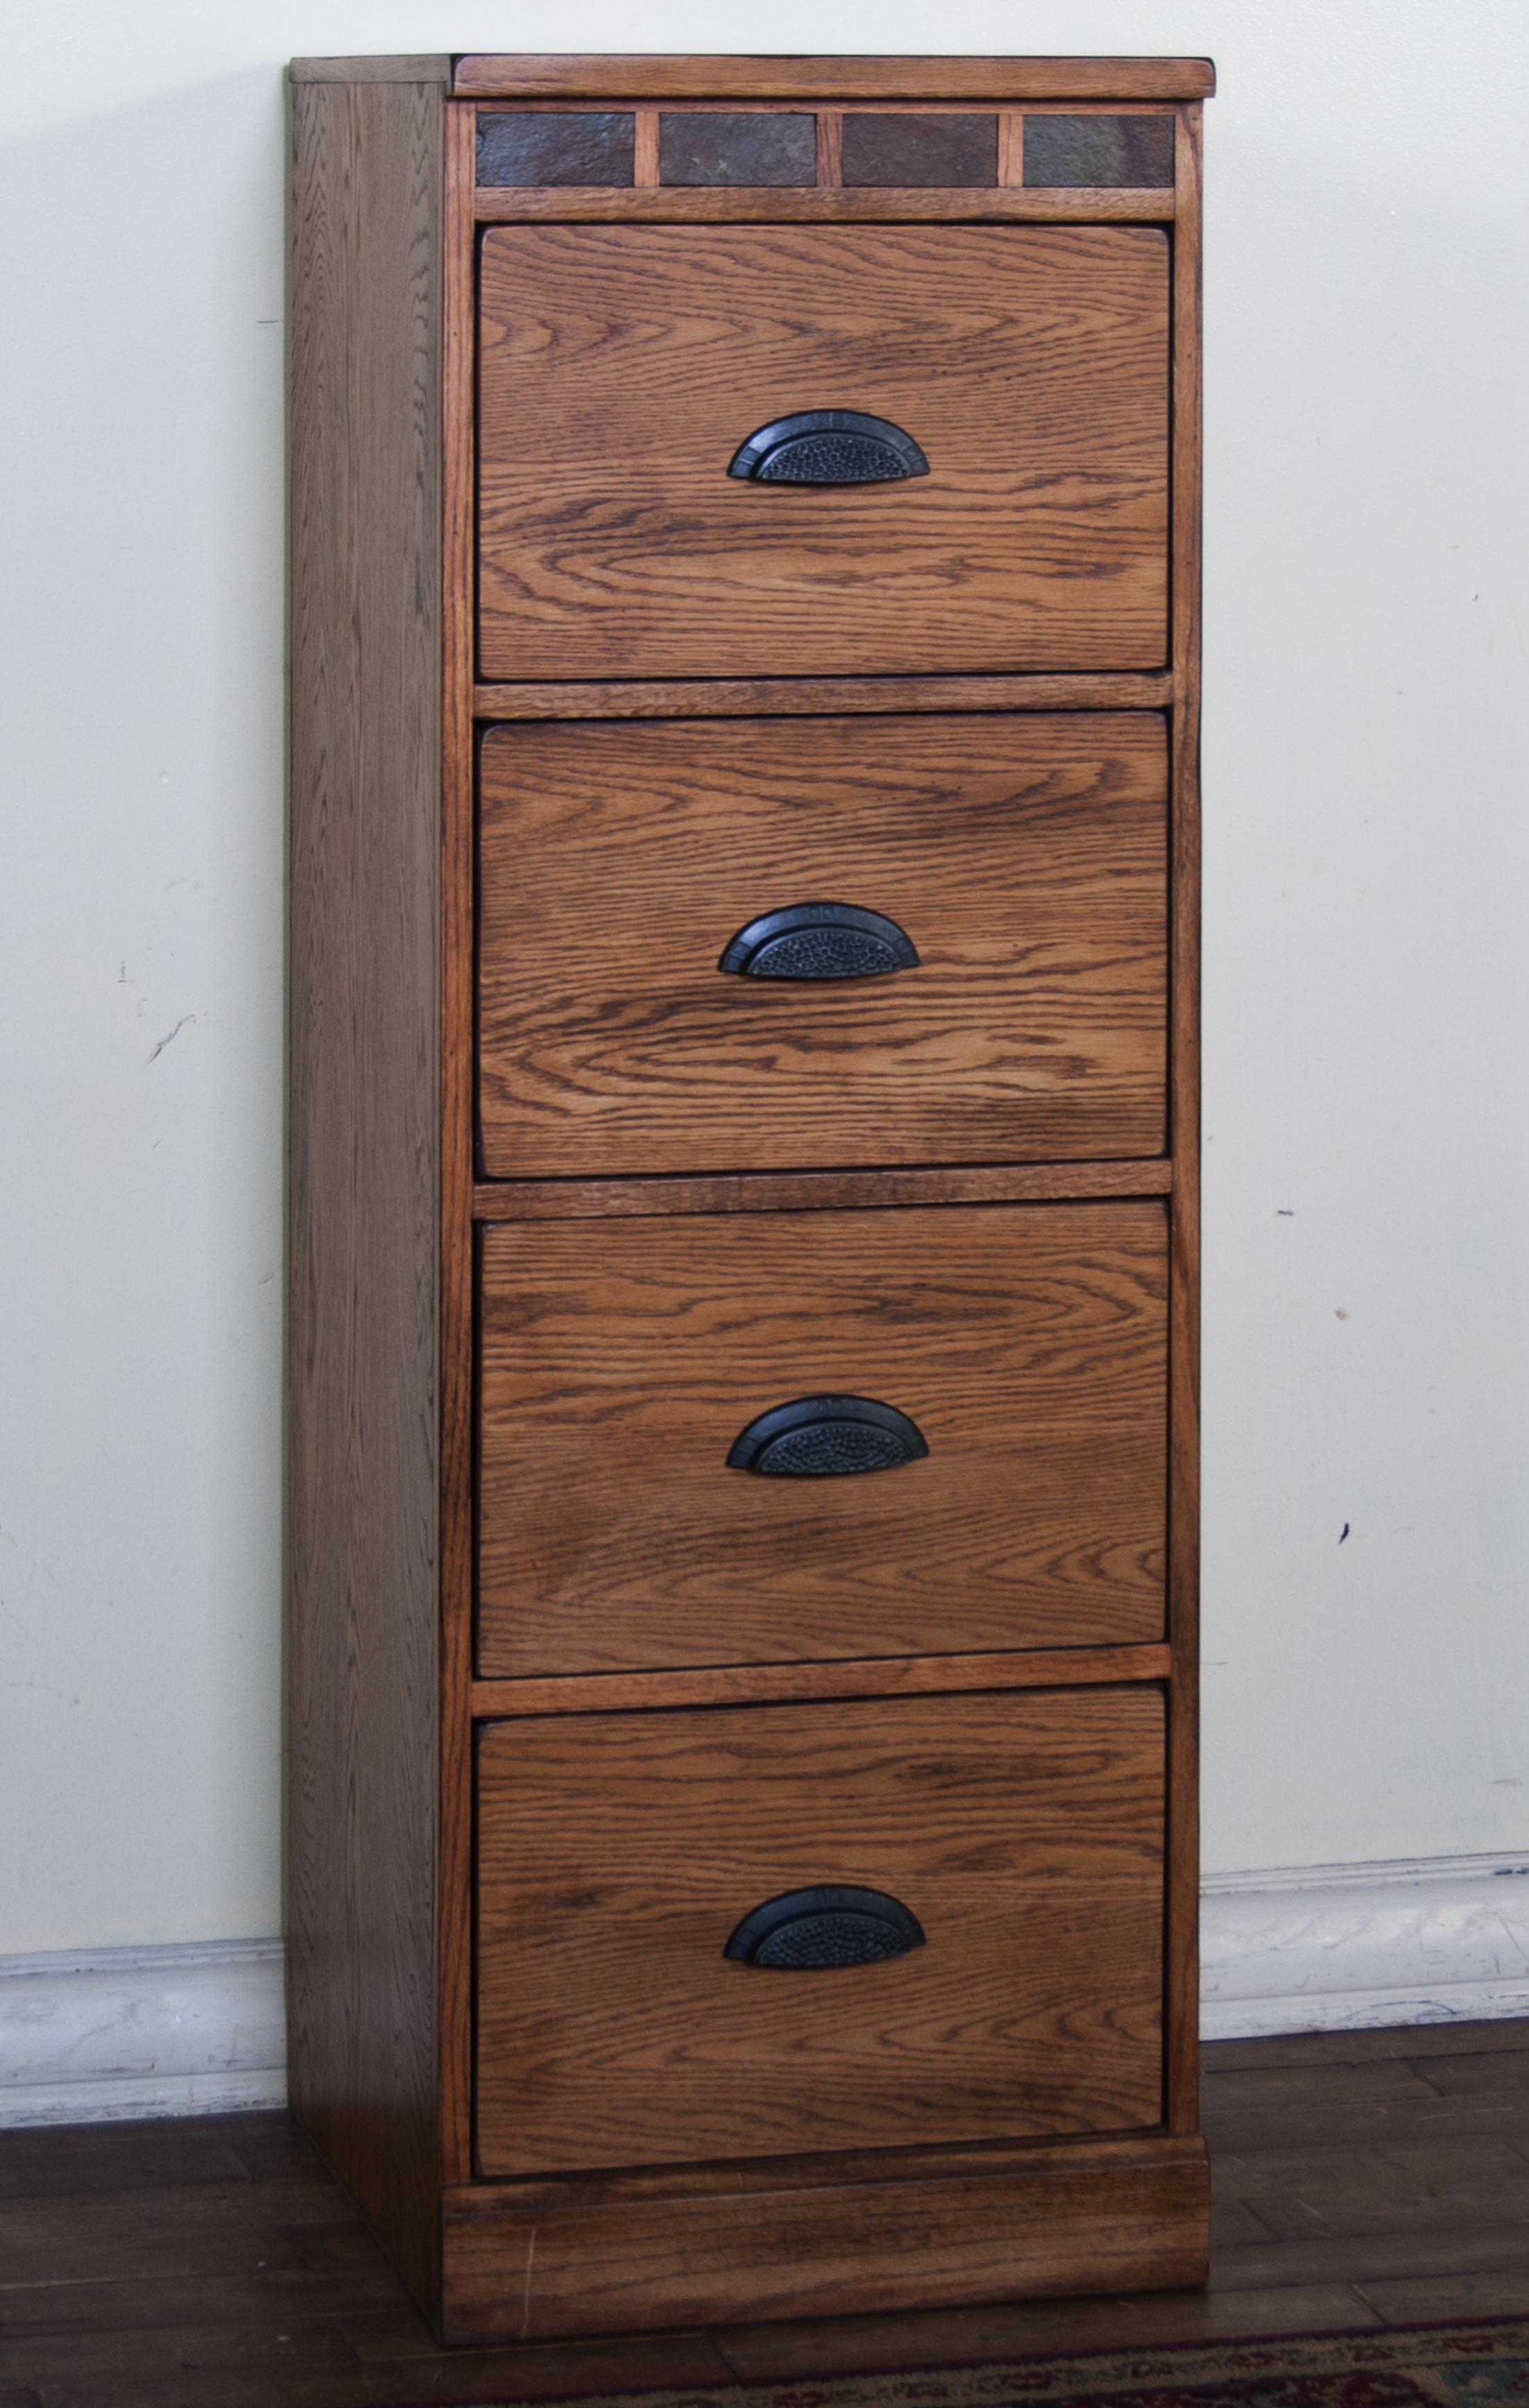 4 Drawer Filing Cabinet Wood Effect Drawer Design throughout sizing 2204 X 3472